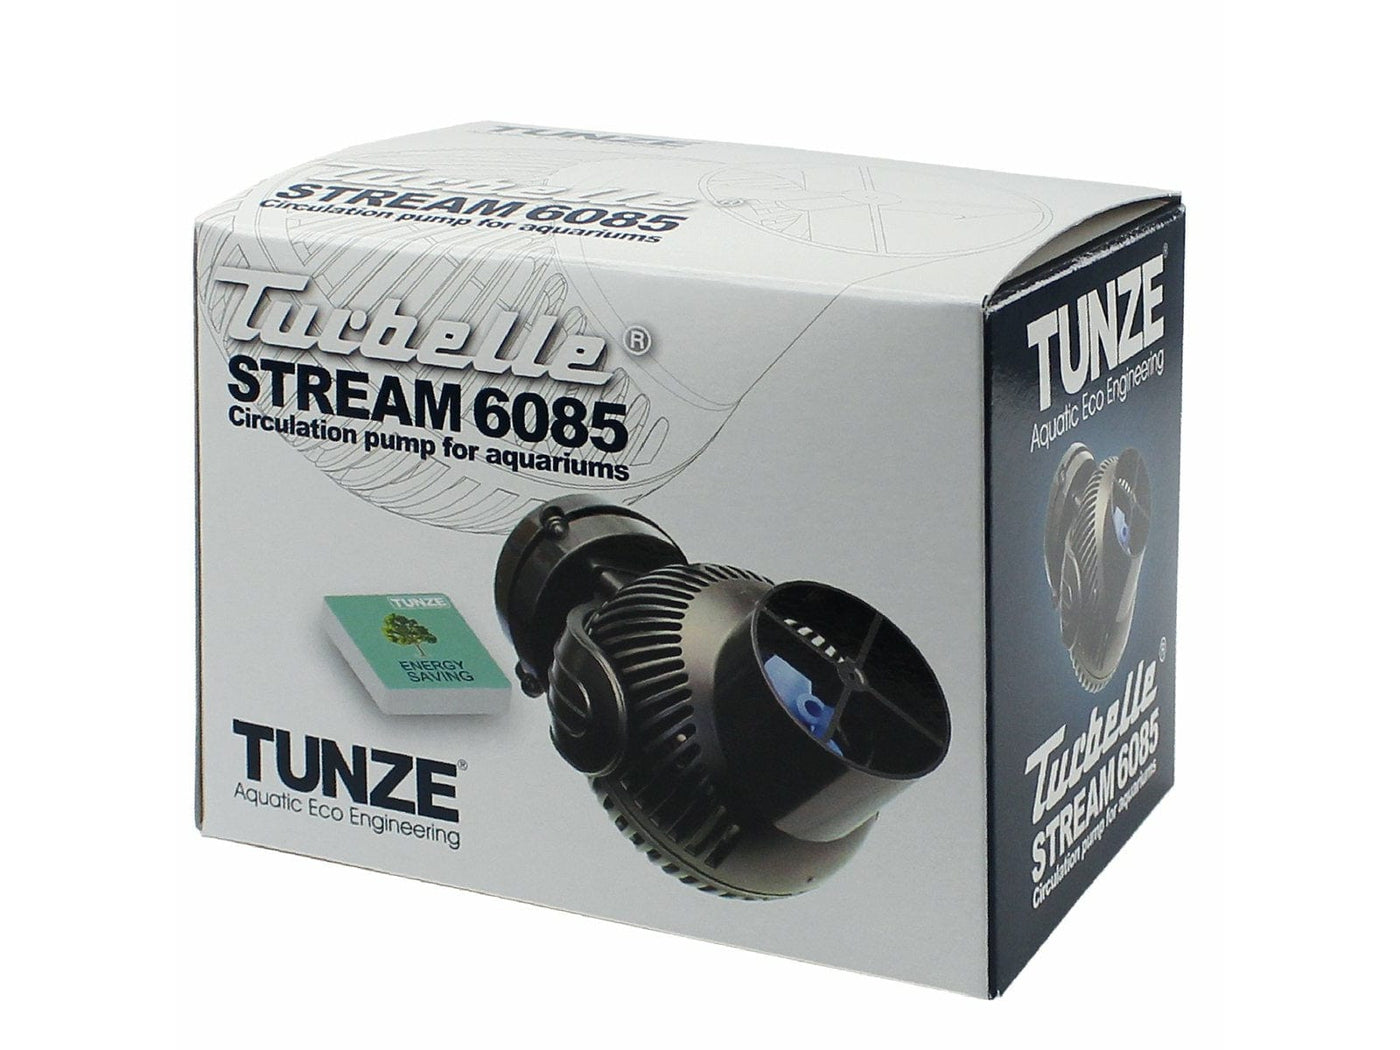 Turbelle® stream 6085